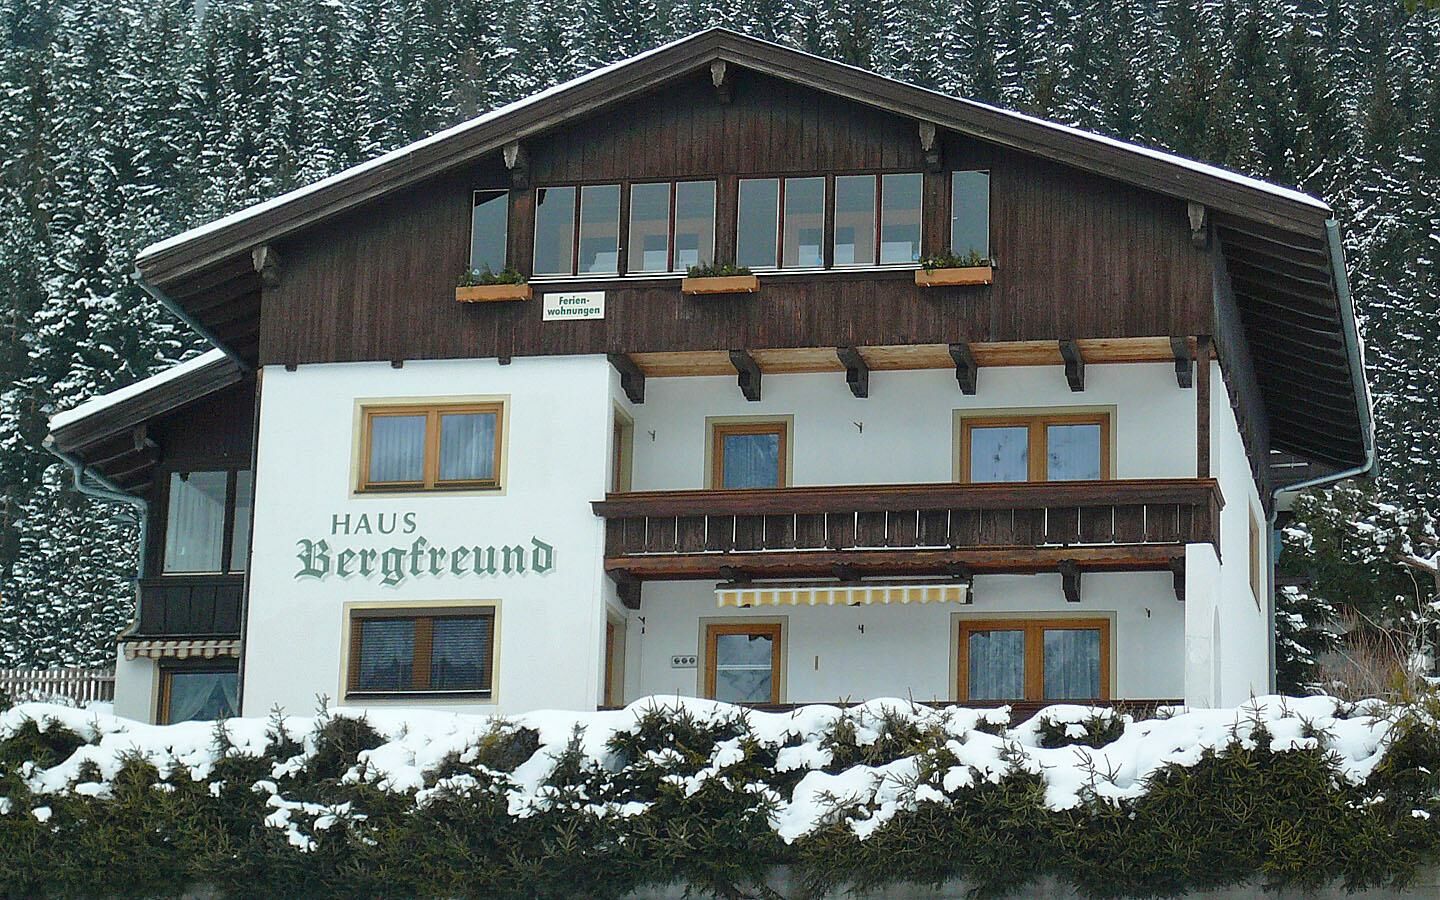 Haus-Bergfreund-Winter.jpg